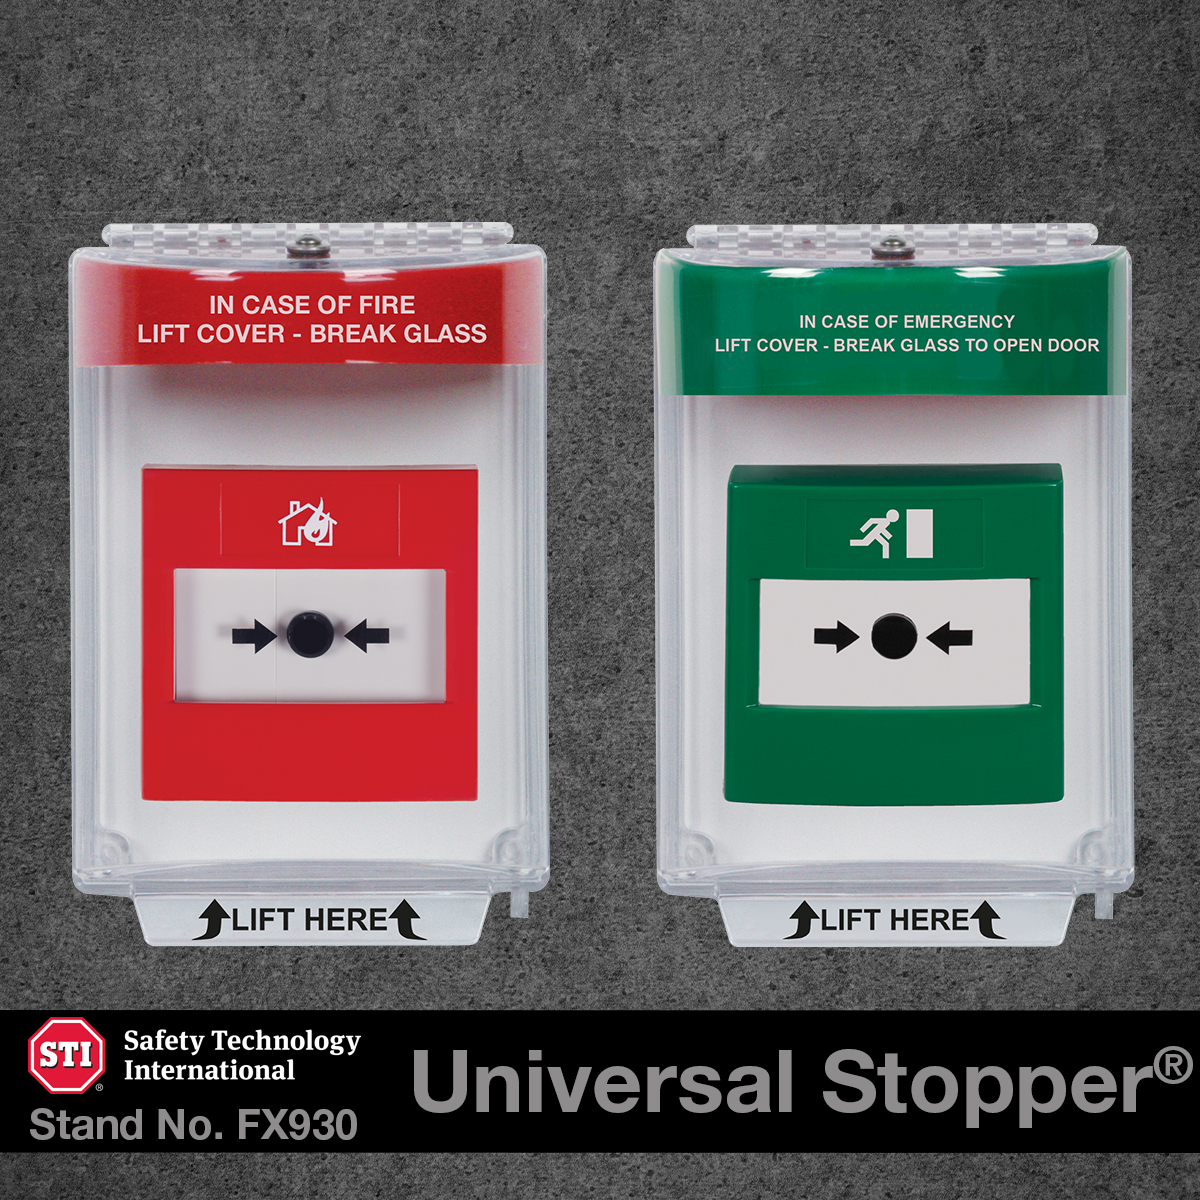 STI Universal Stopper ®